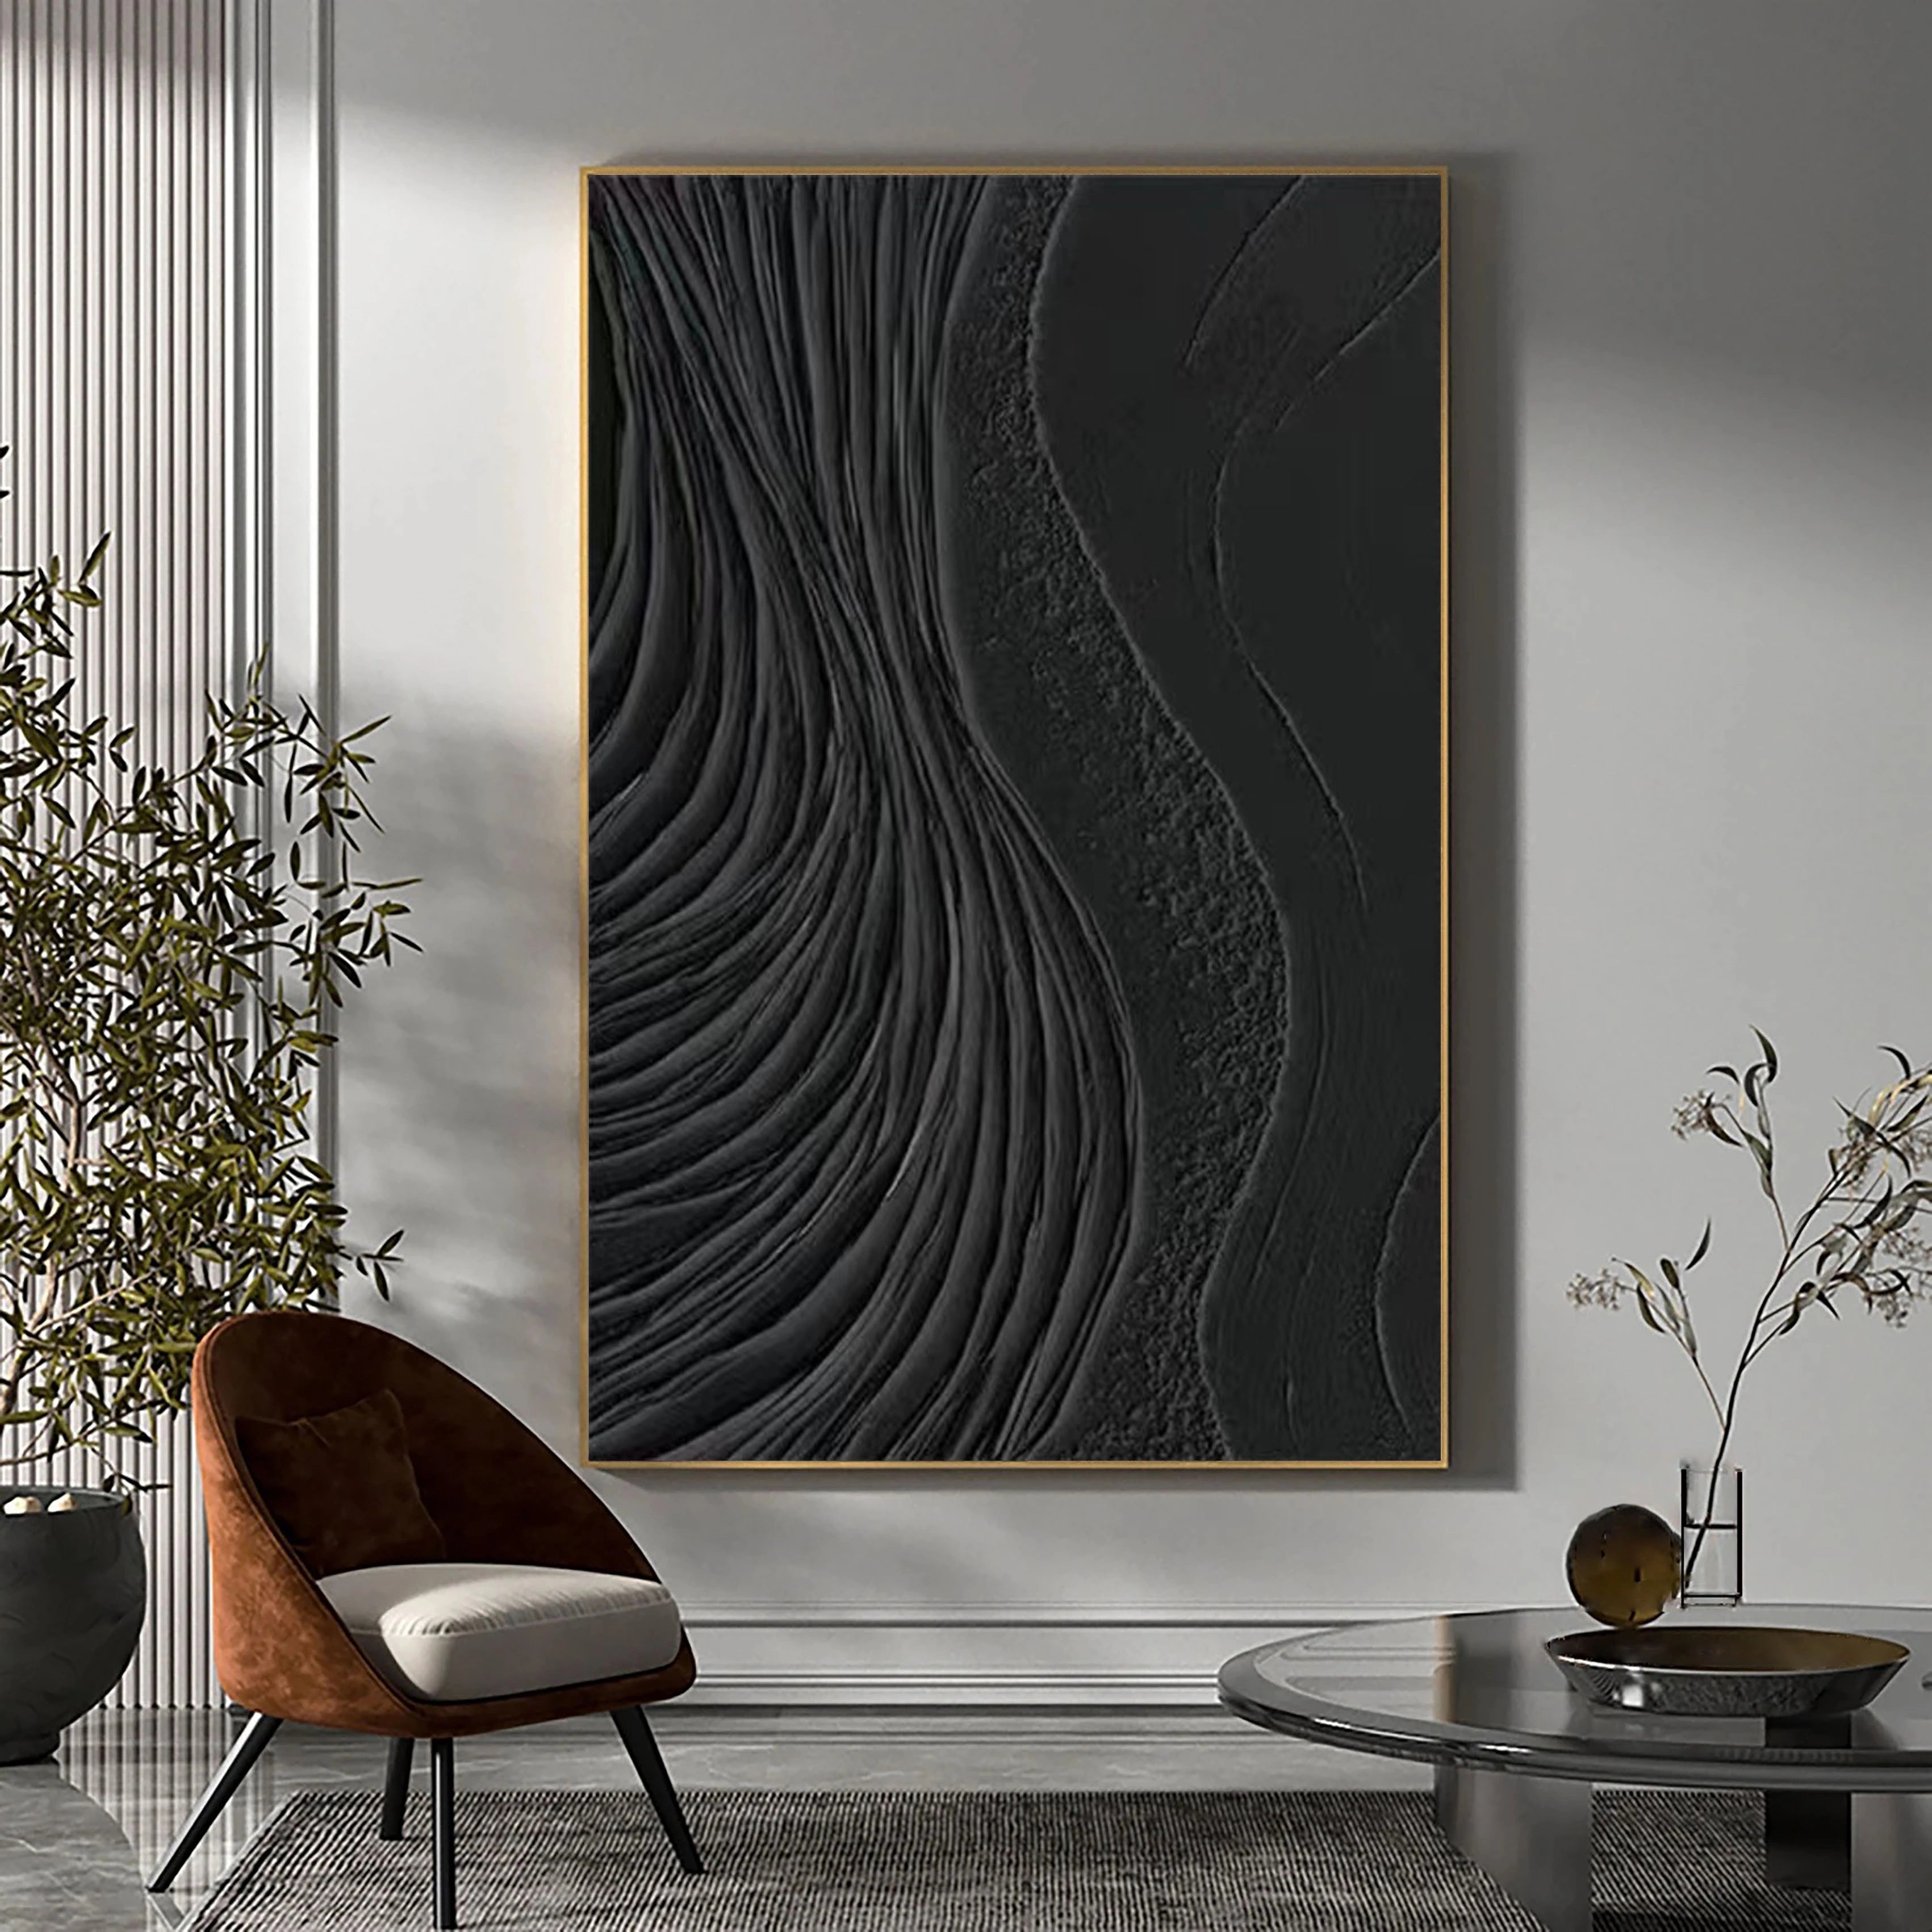 3D Textured Black Surf Minimalist Painting Modernism Wall Art For Living Room/Bedroom